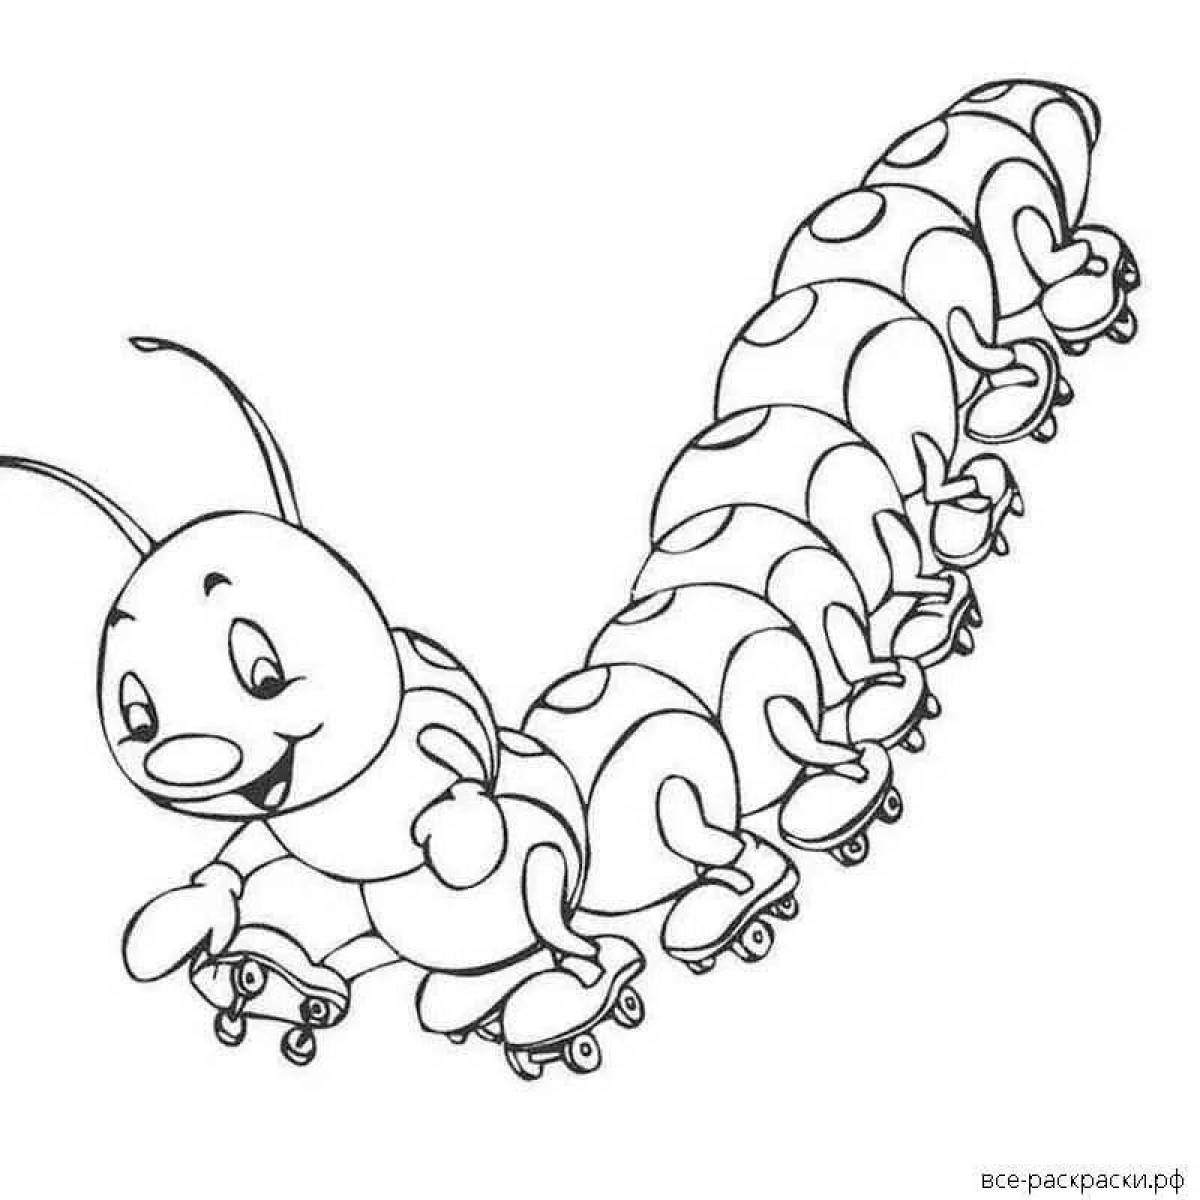 Fun dog caterpillar coloring page